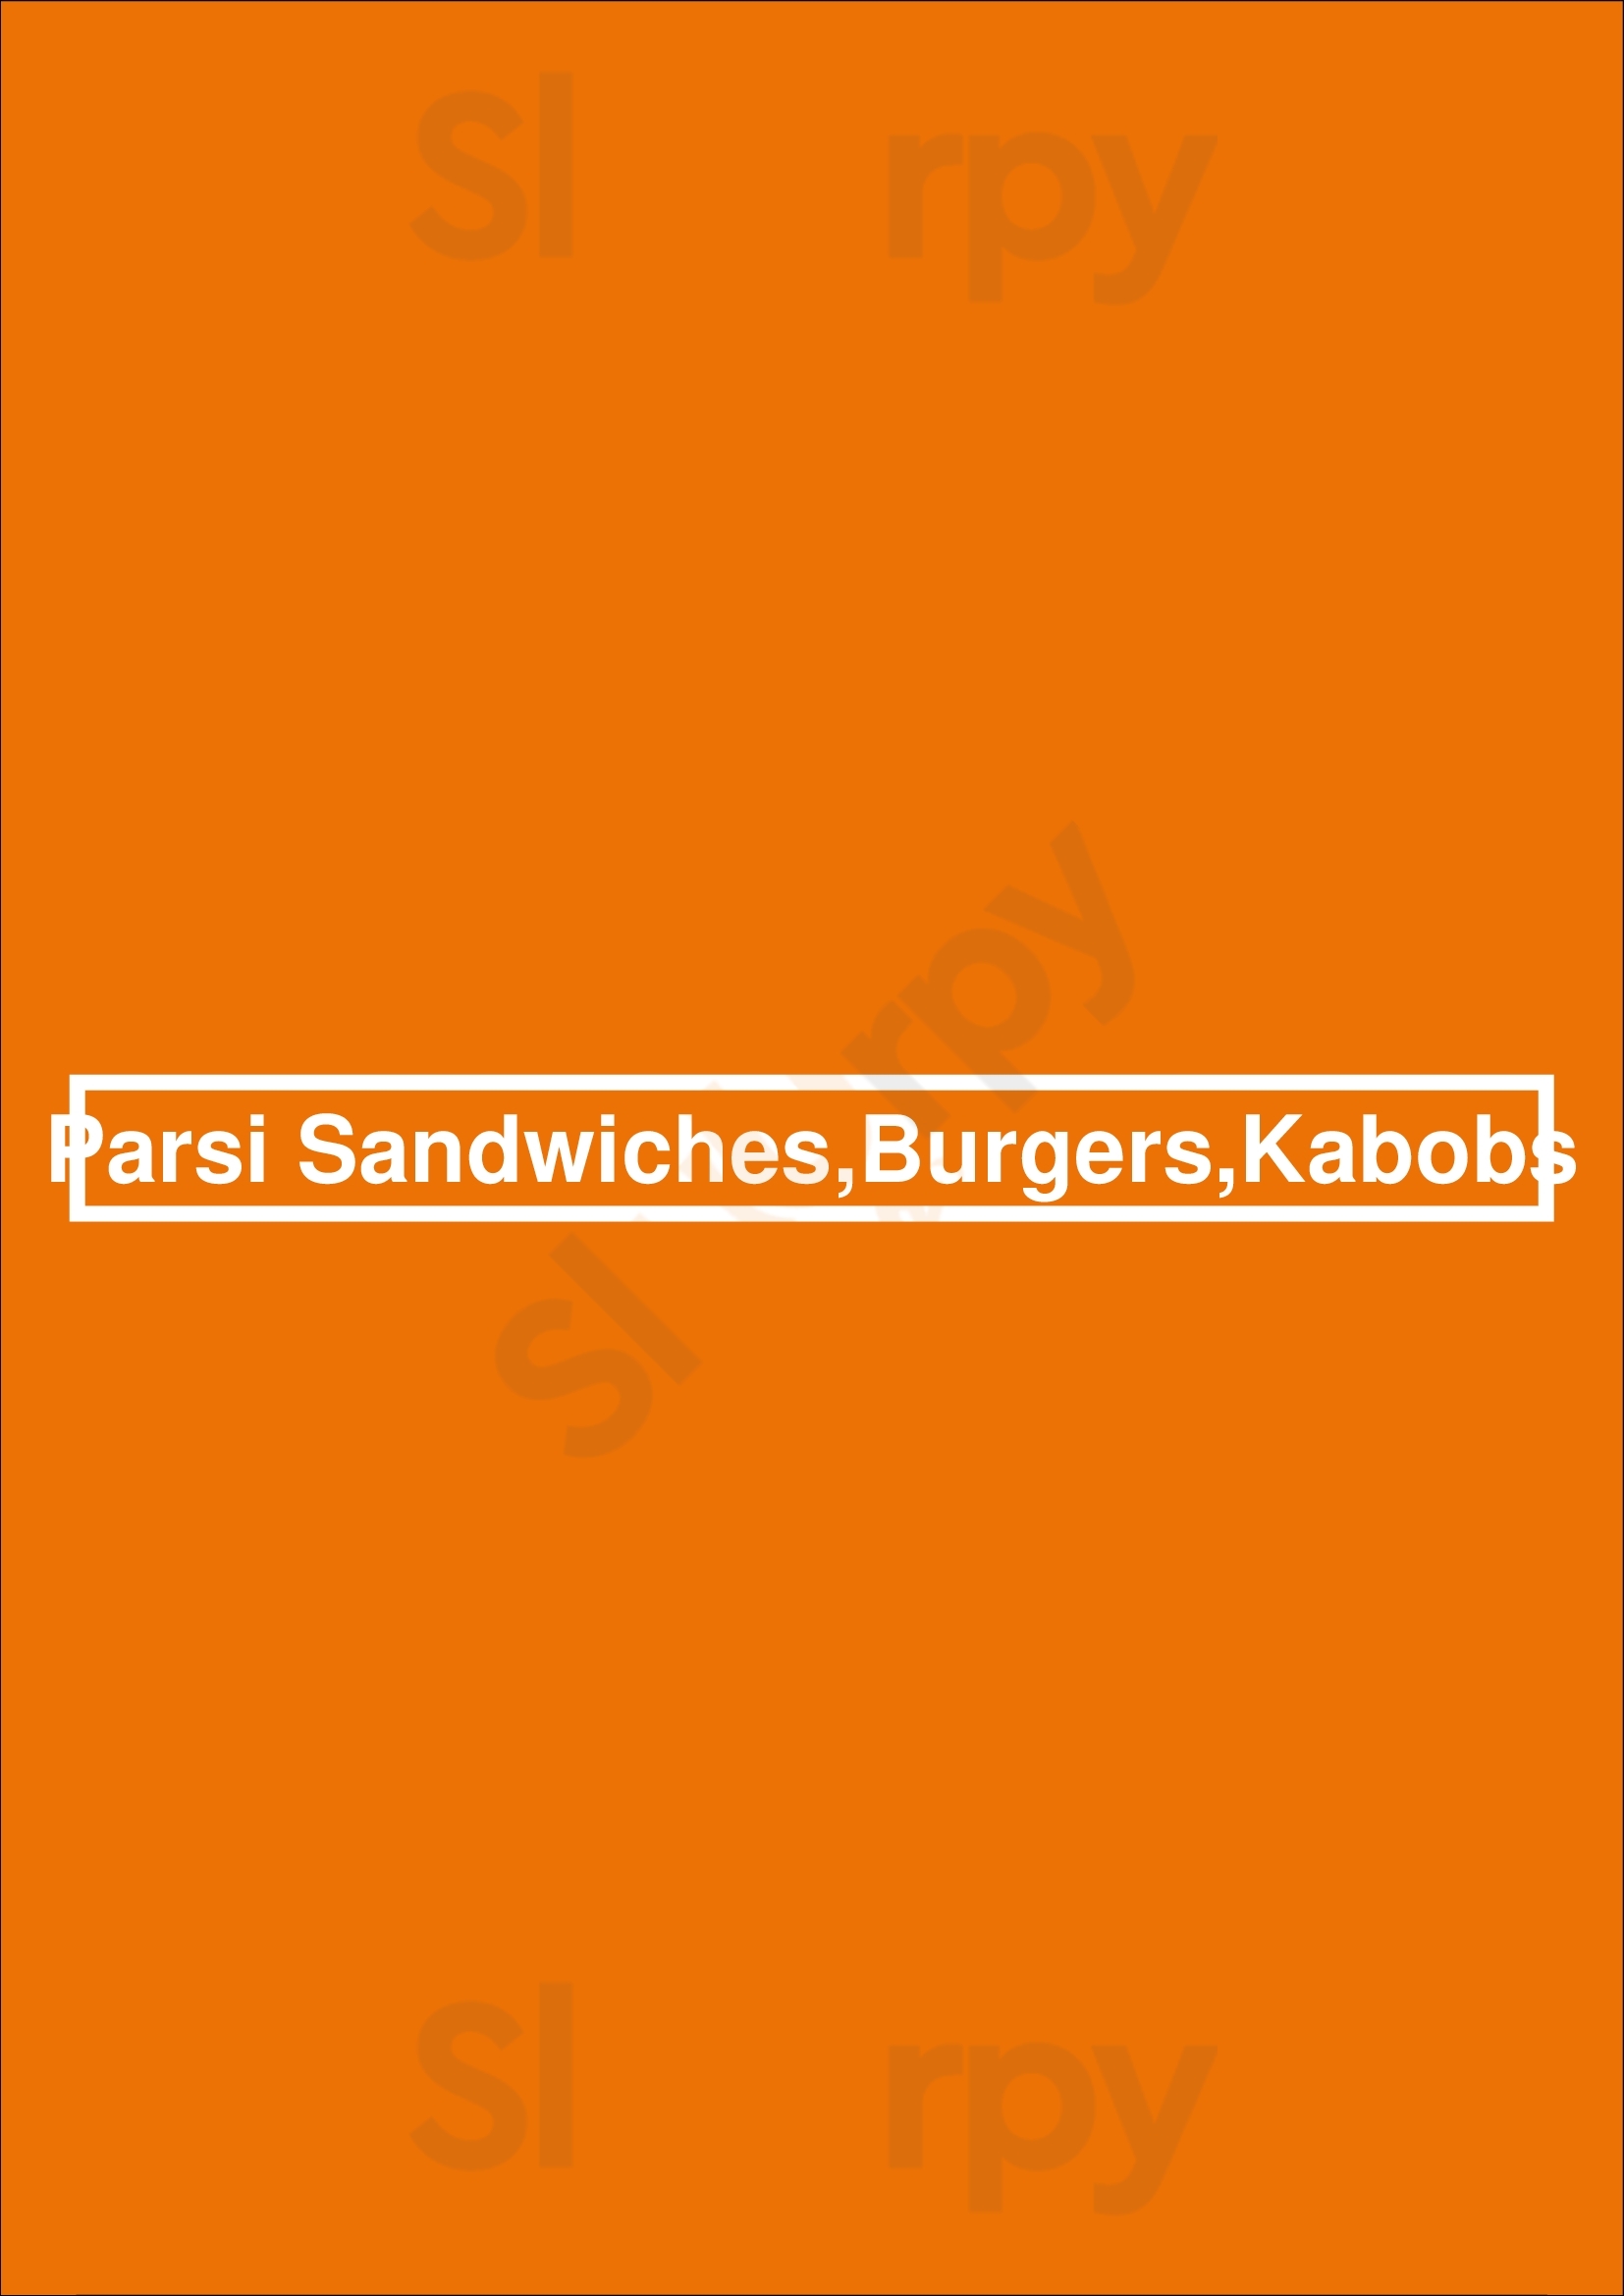 Parsi Sandwiches,burgers,kabobs Markham Menu - 1